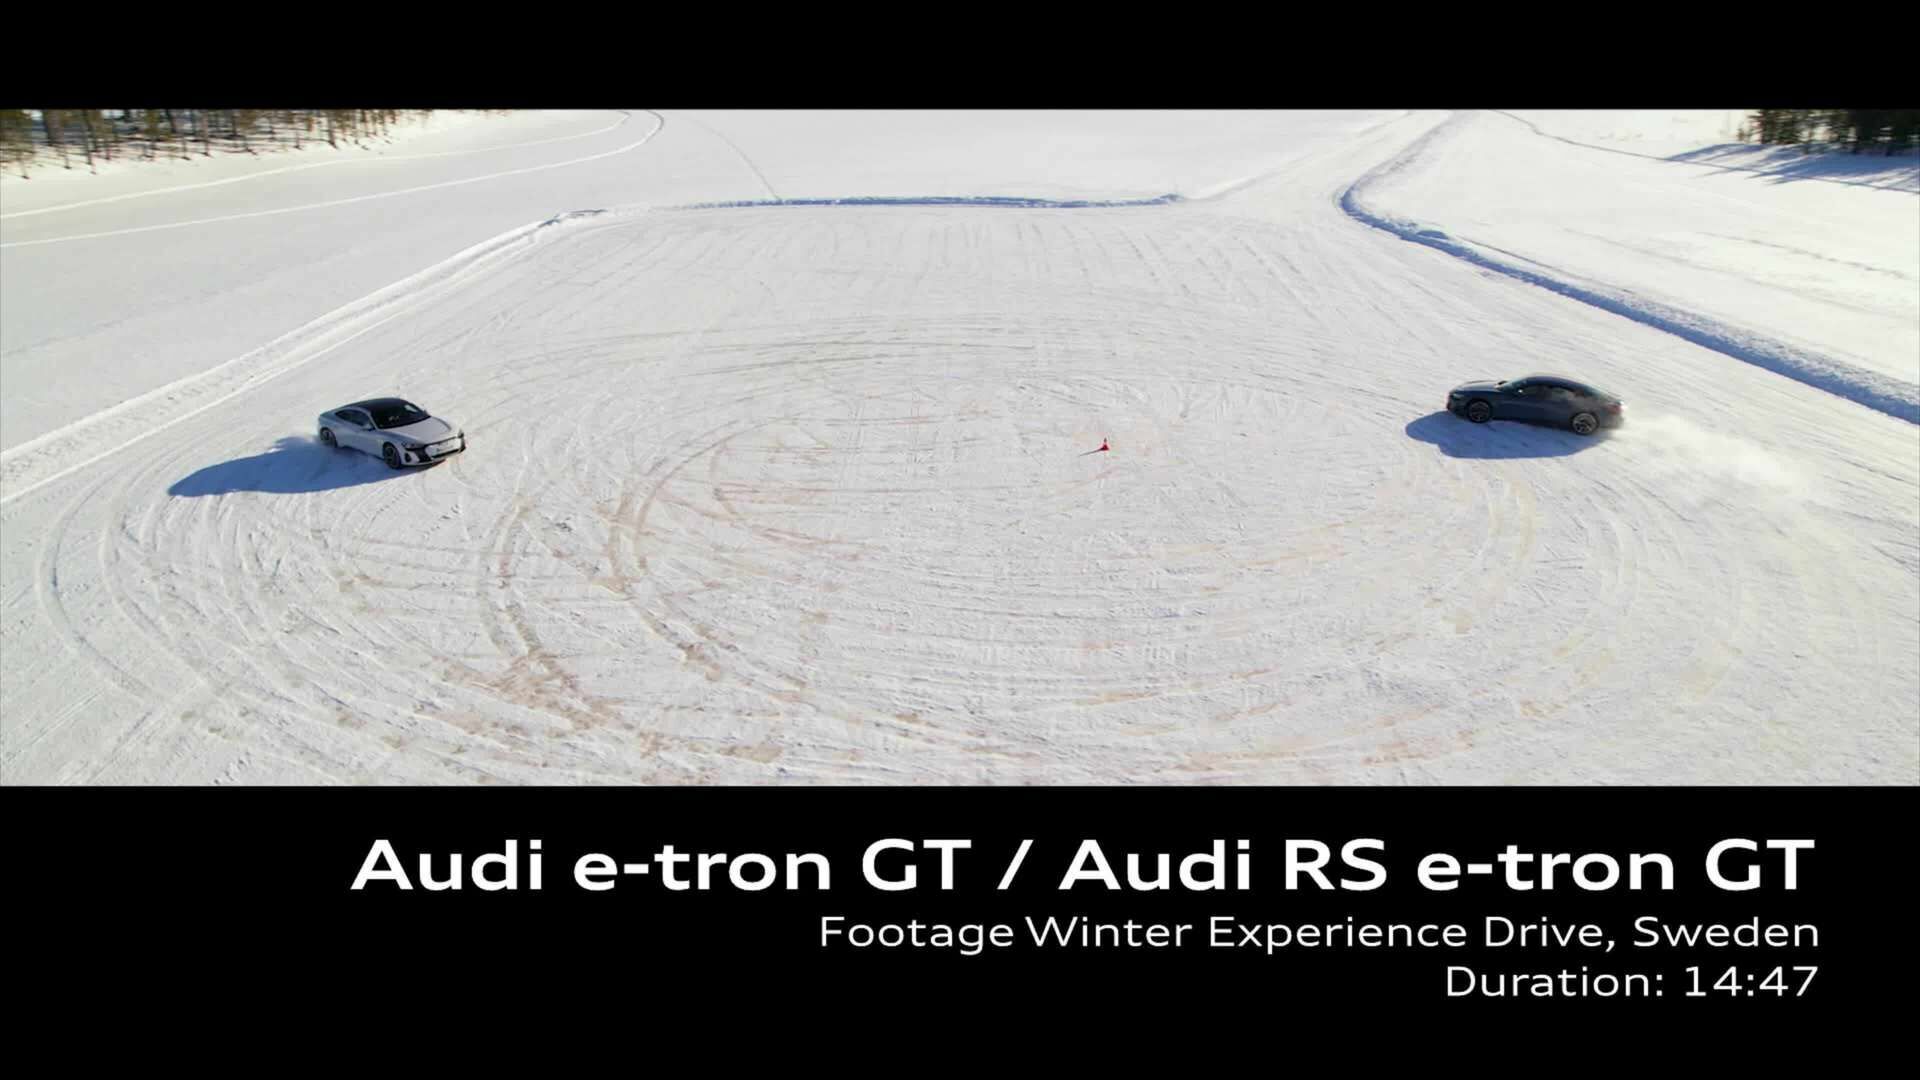 Footage: Audi e-tron GT and Audi RS e-tron GT